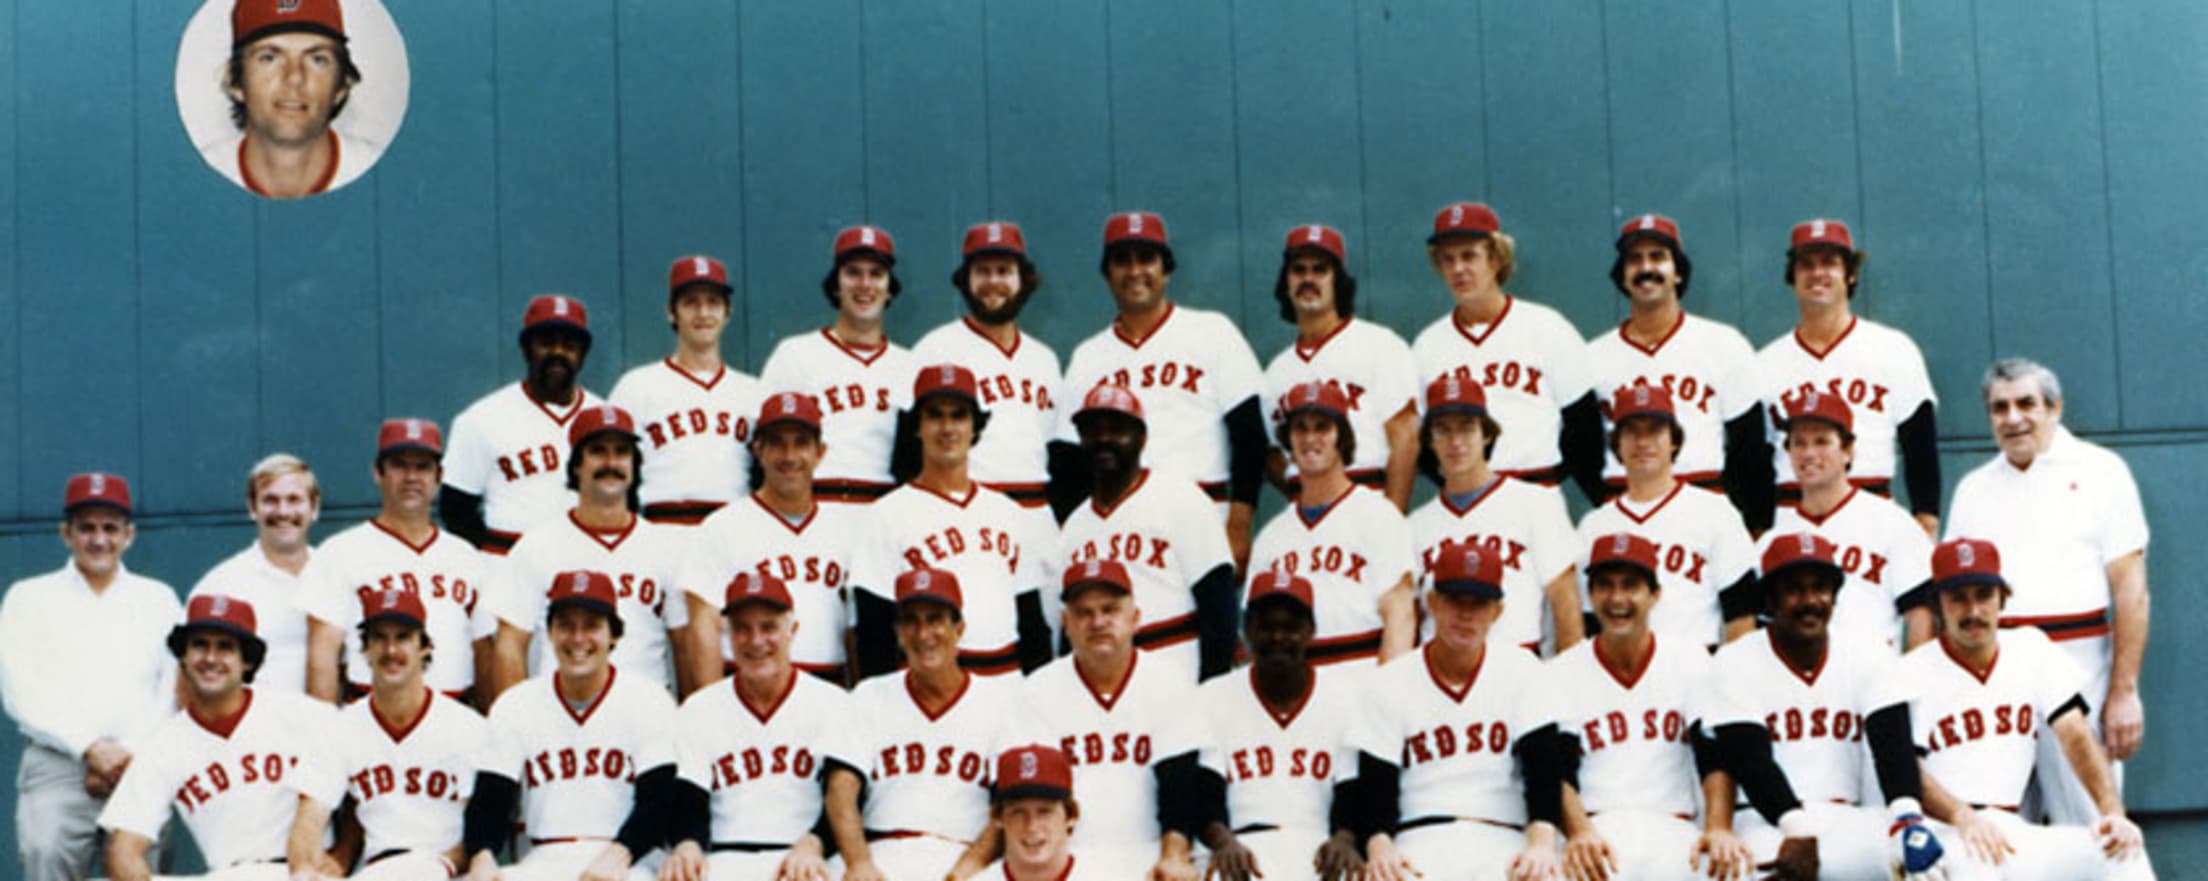 Carl Yastrzemski Game Worn Signed Jersey 1978 Boston Red Sox HOF